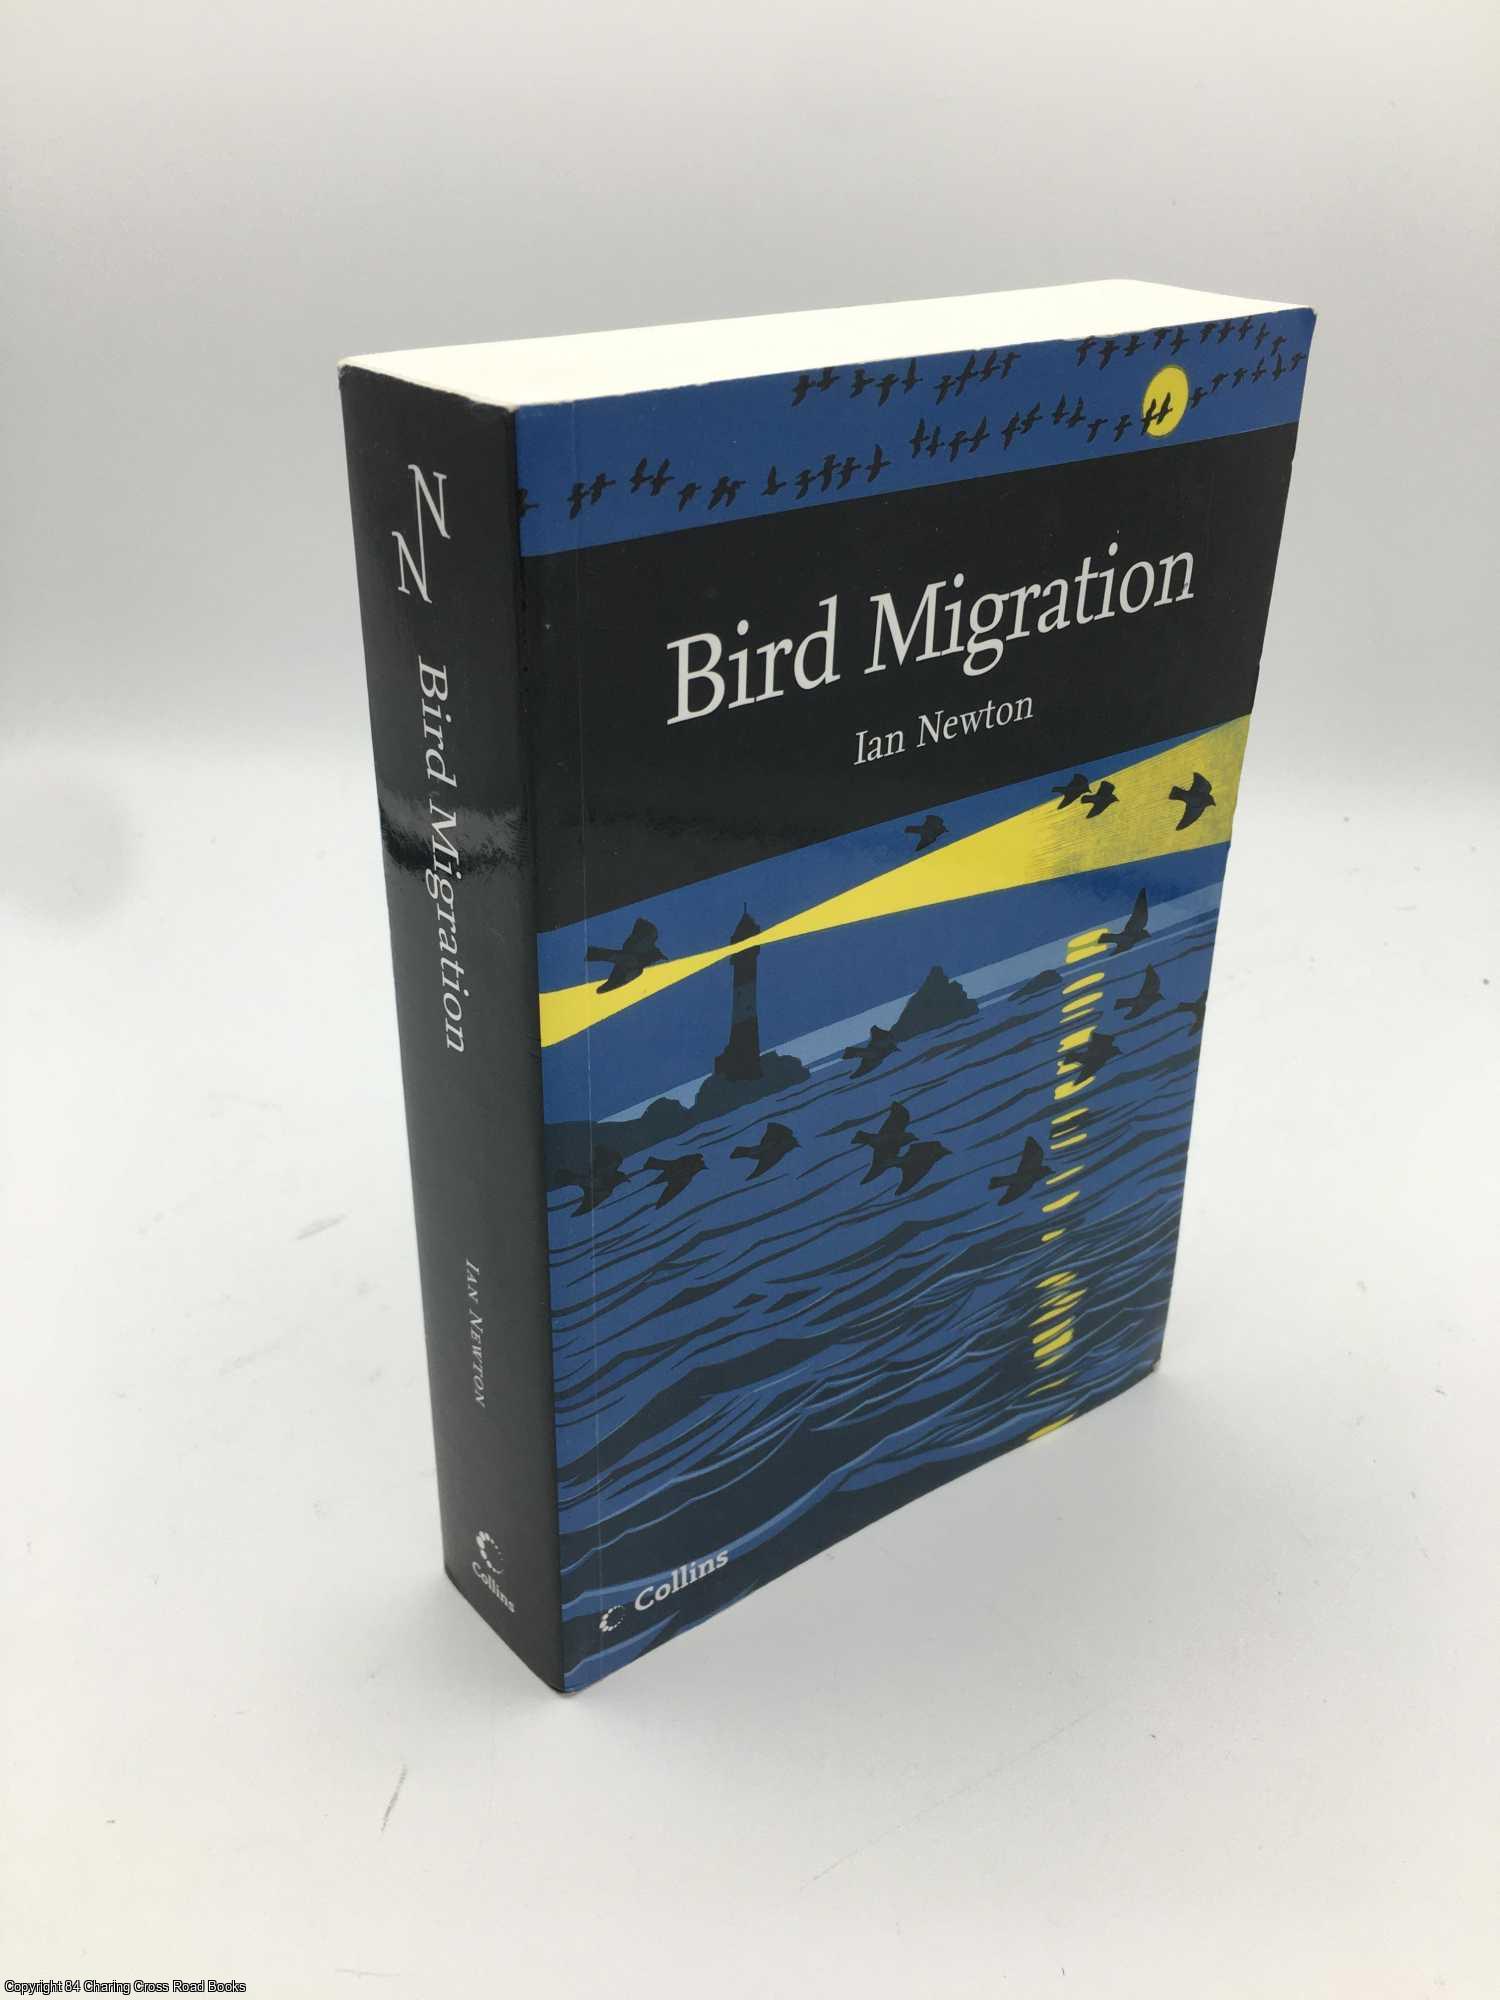 Newton, Ian - Collins New Naturalist Library: Bird Migration